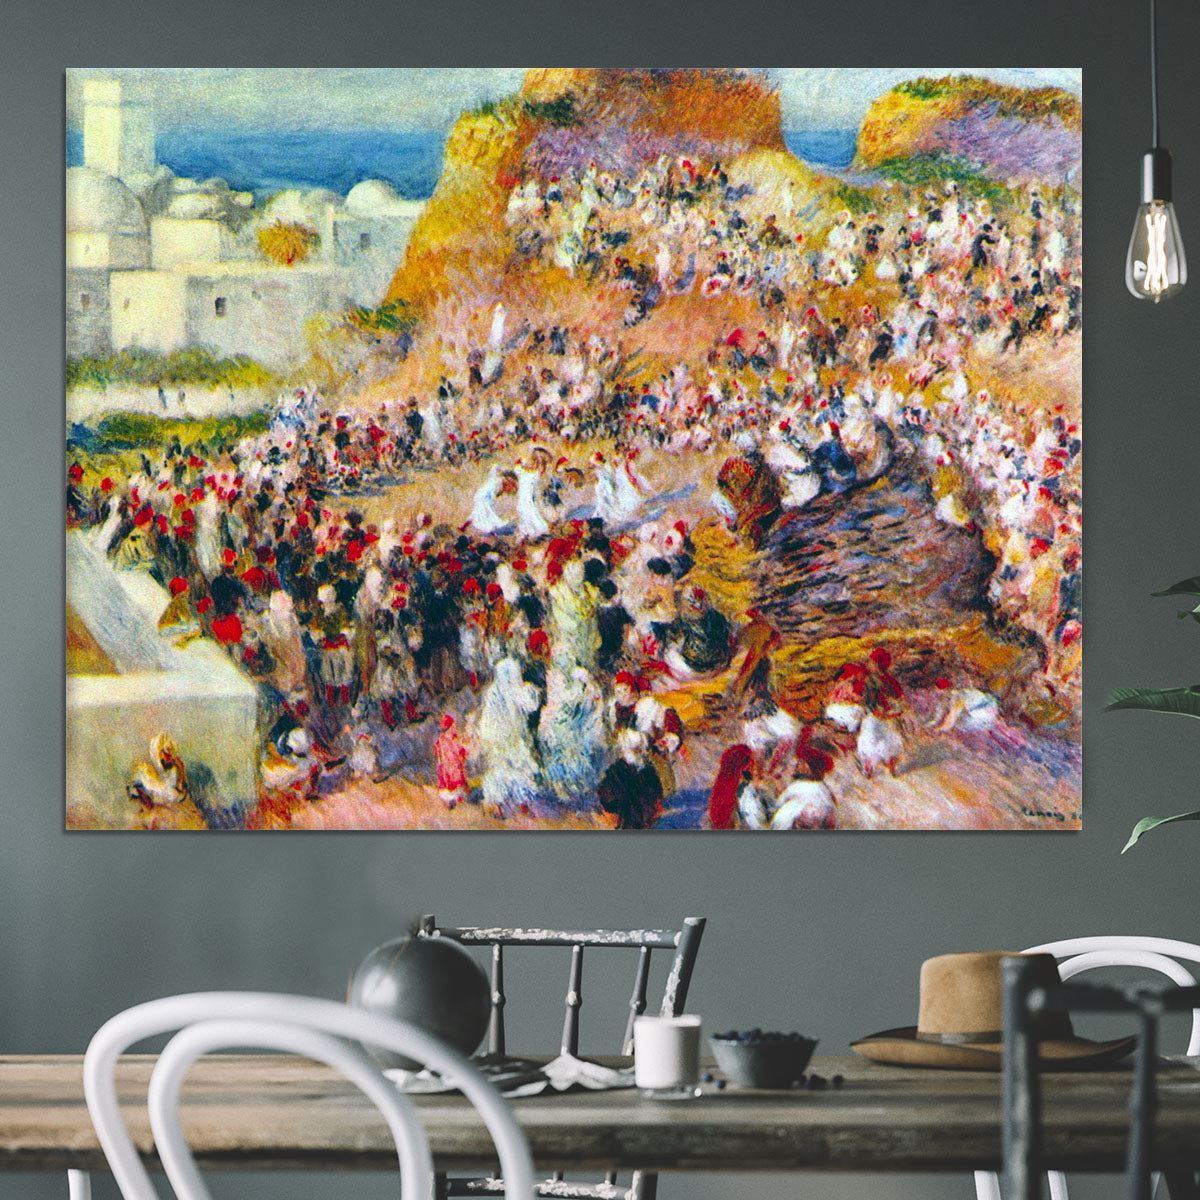 The mosque Arabian Fest by Renoir Canvas Print or Poster - Canvas Art Rocks - 3